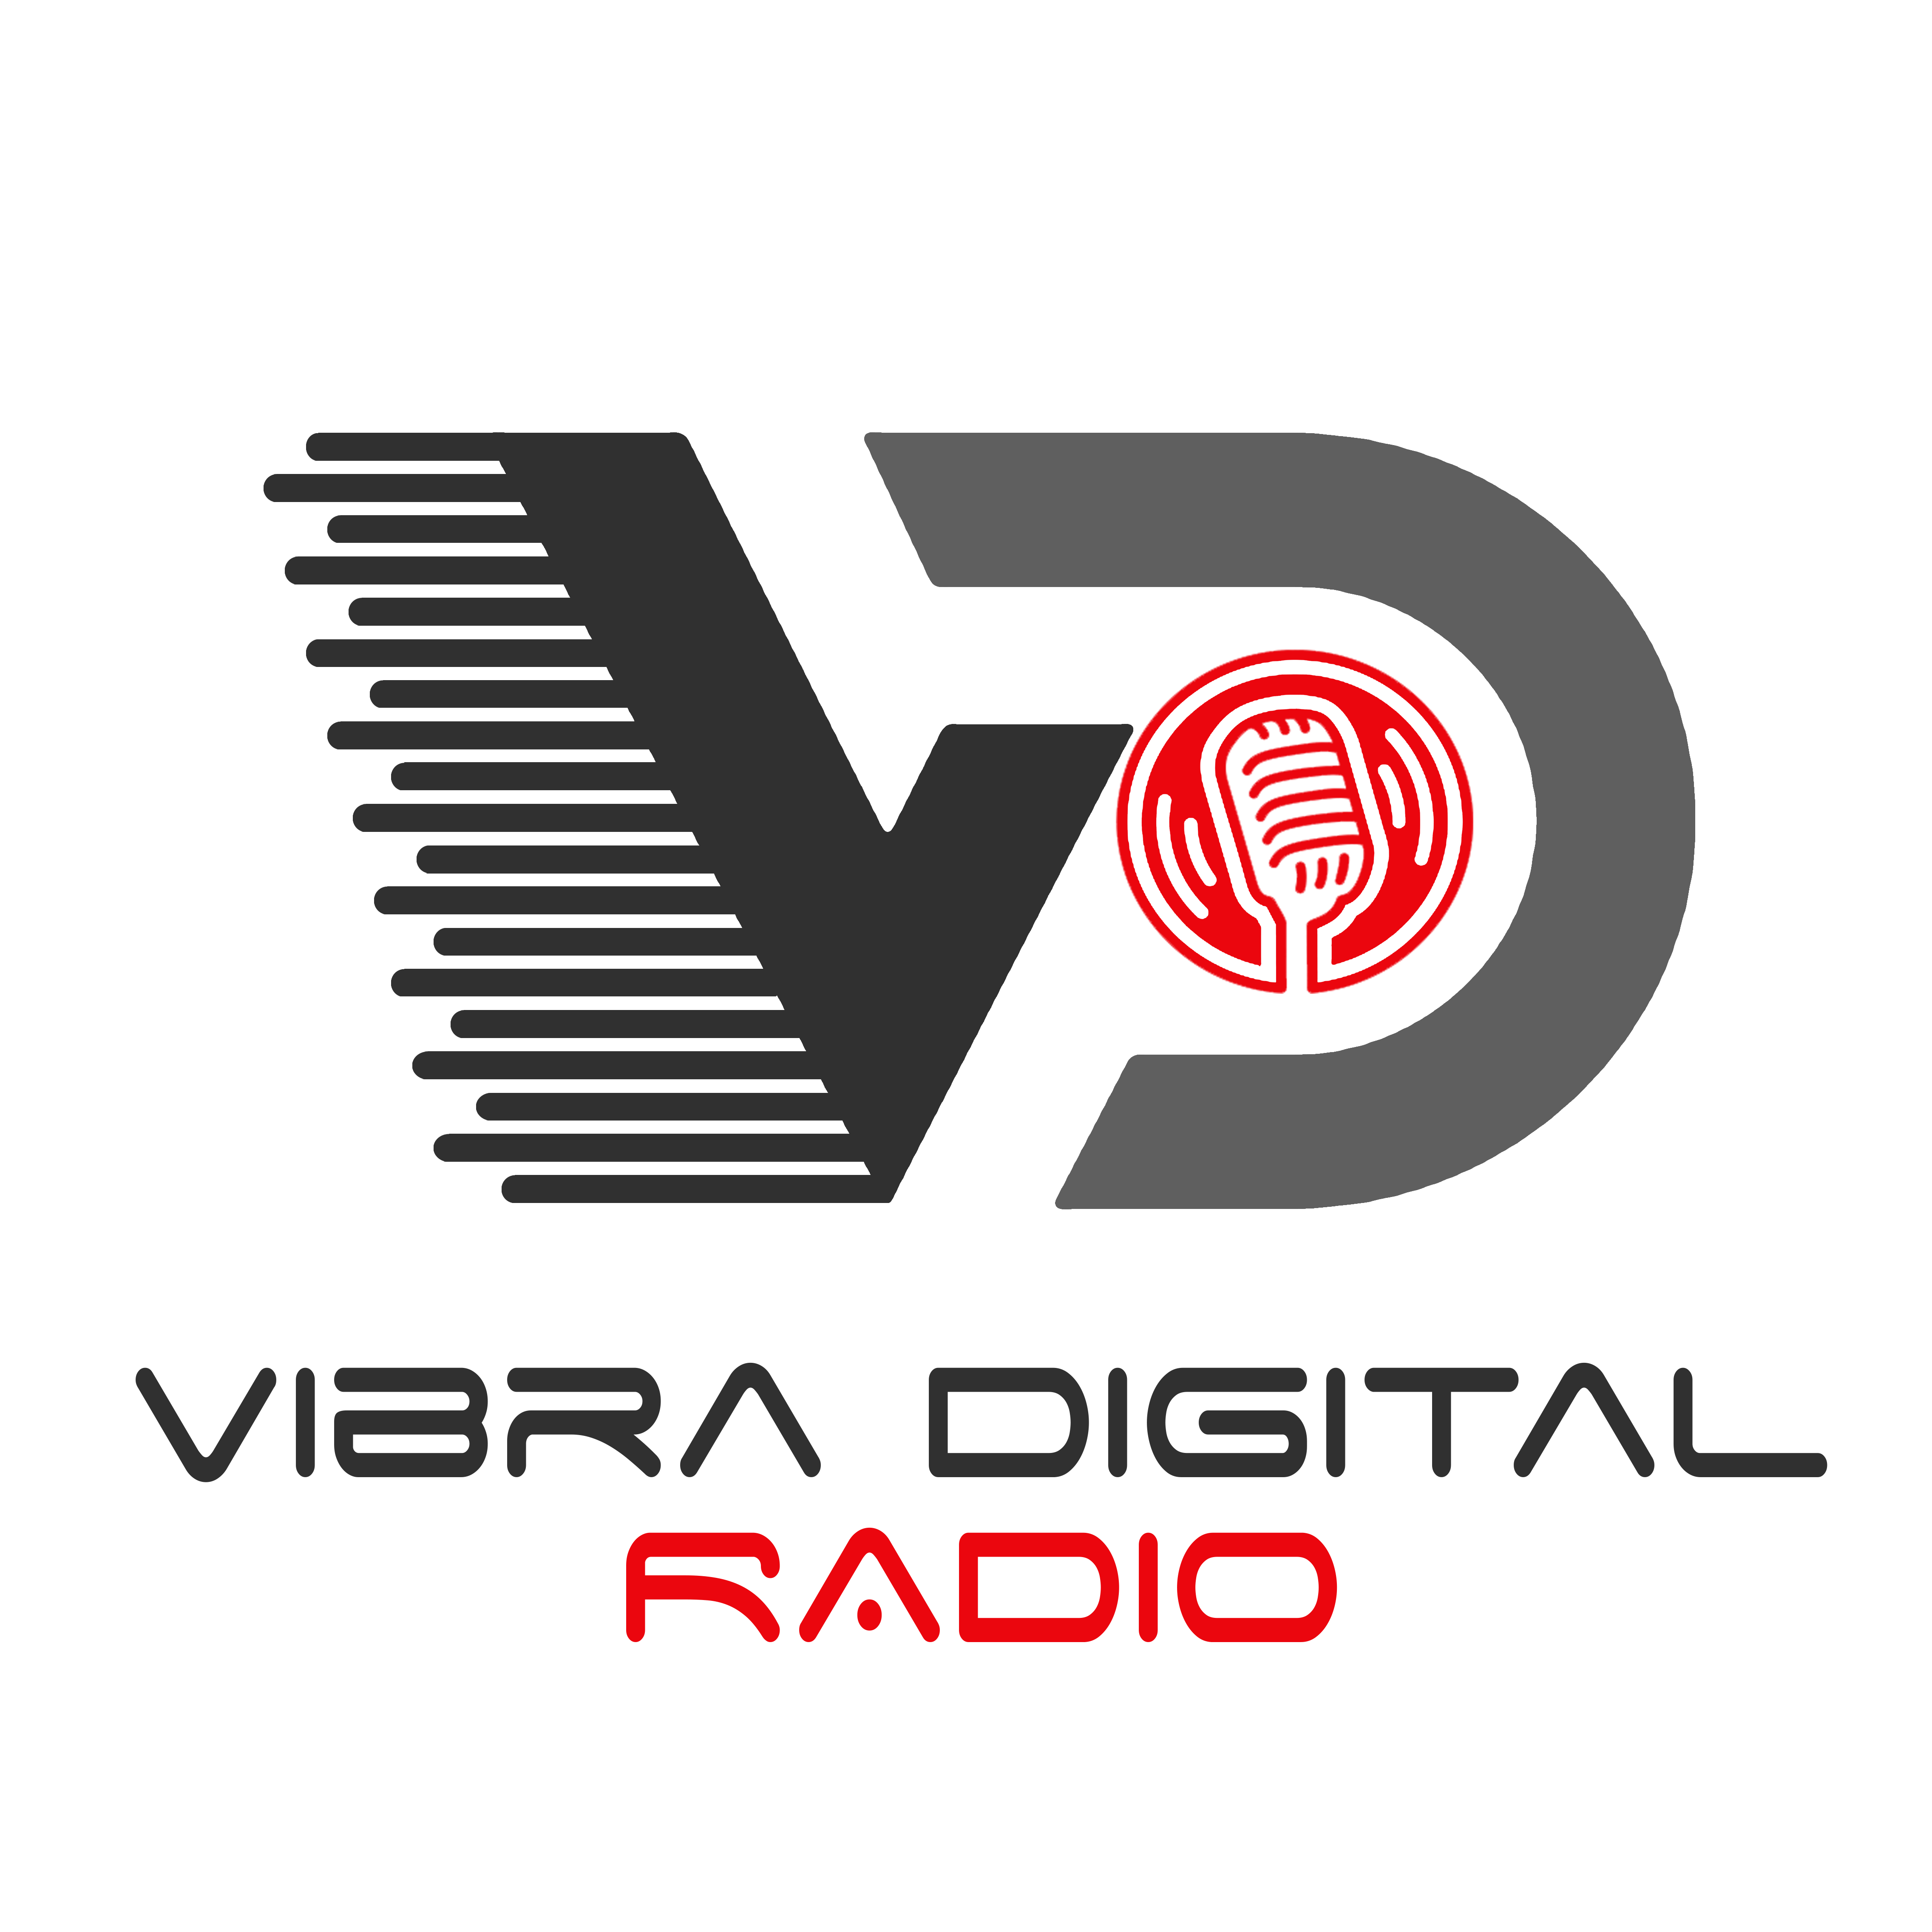 Vibra Digital Radio